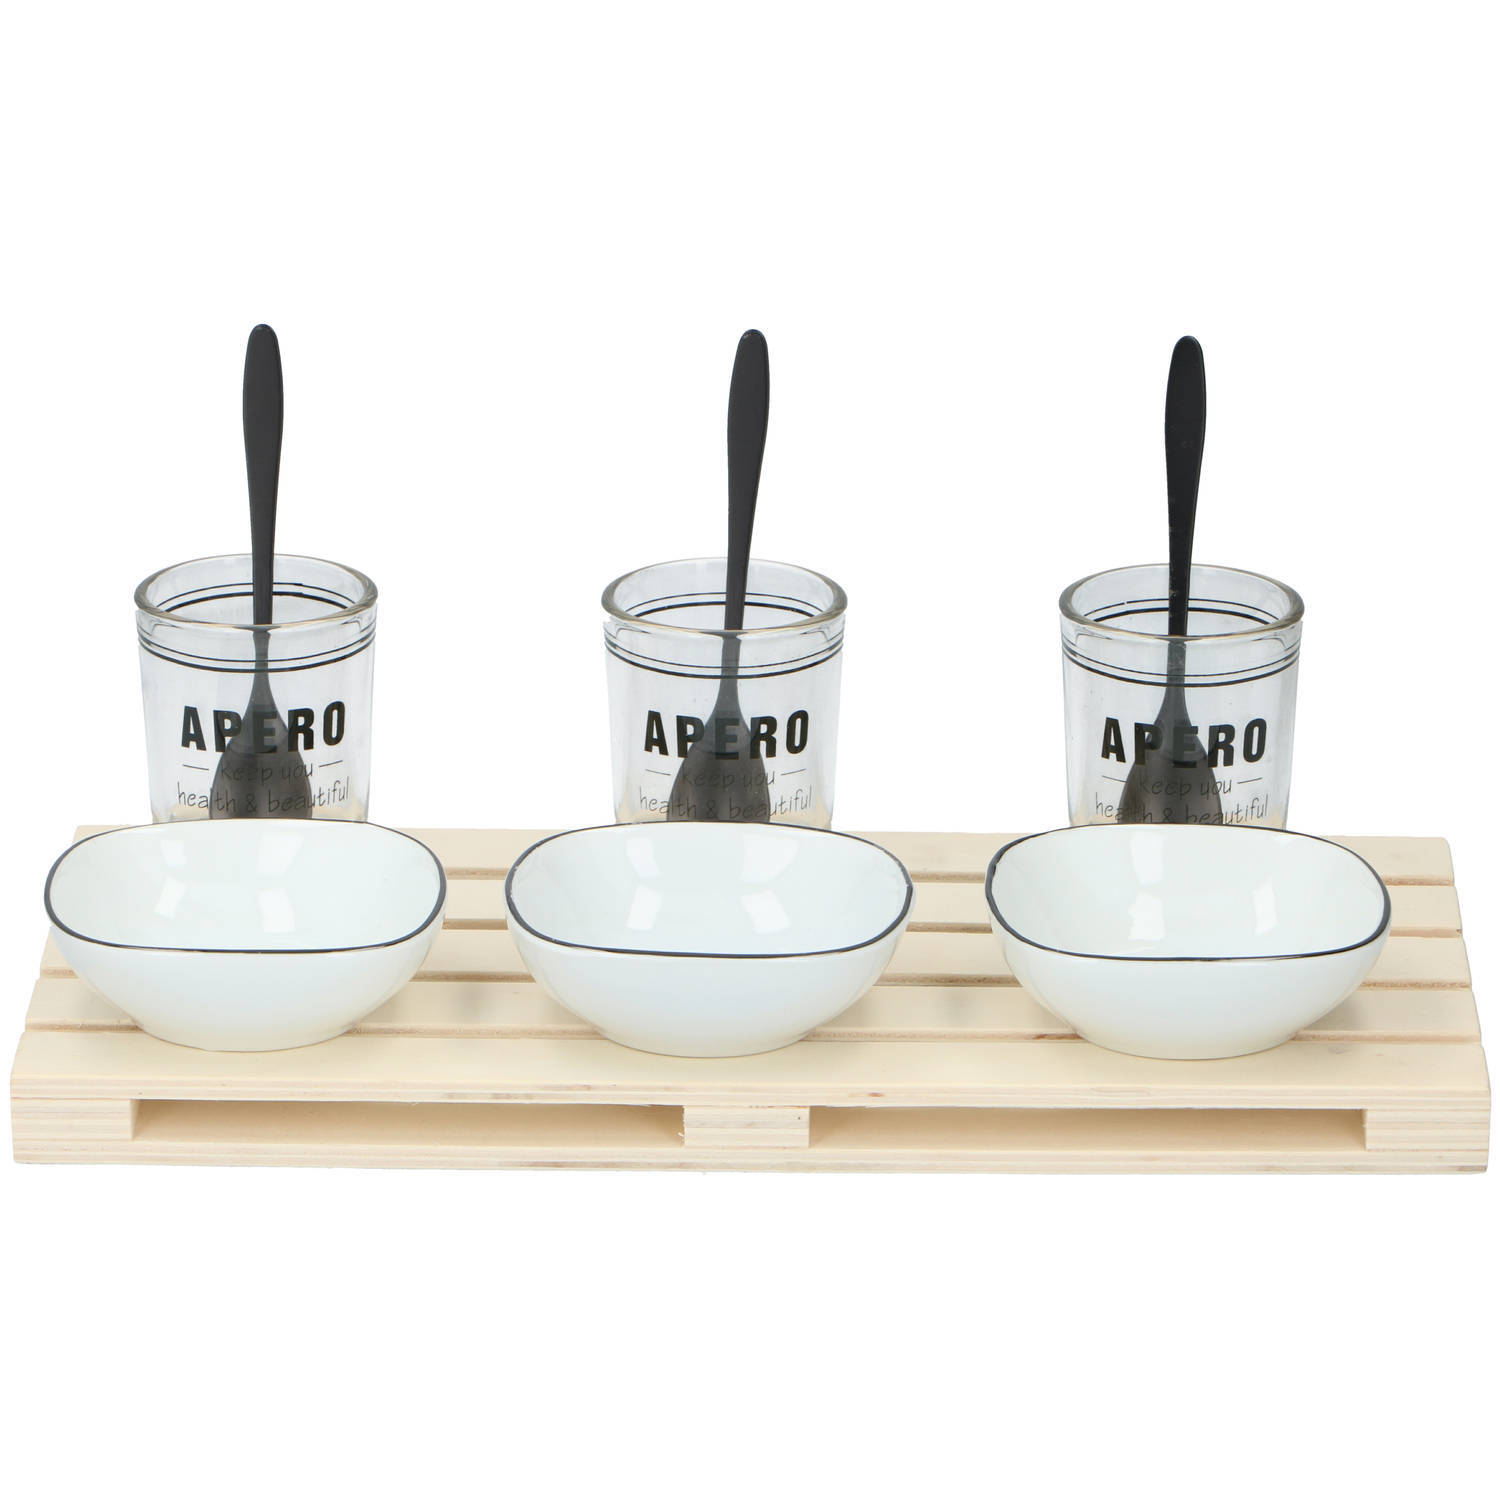 Alpina Kitchen & Home amuseset - 3 glaasjes 3 bakjes 3 lepels - houten tray - voor hapjes en amuses